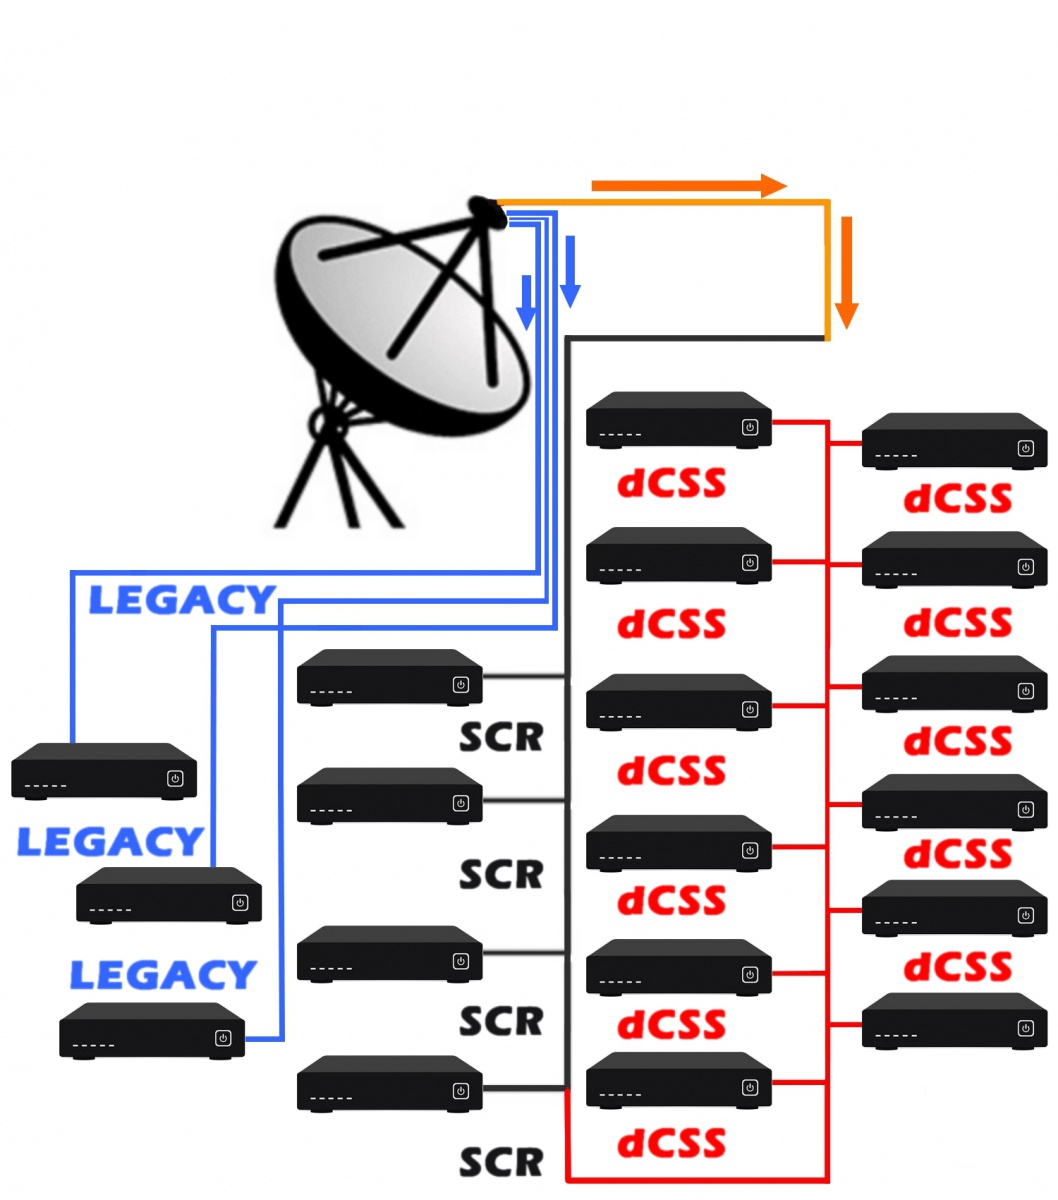 LNB dCSS SCR LEGACY mitan per 19 utenze  